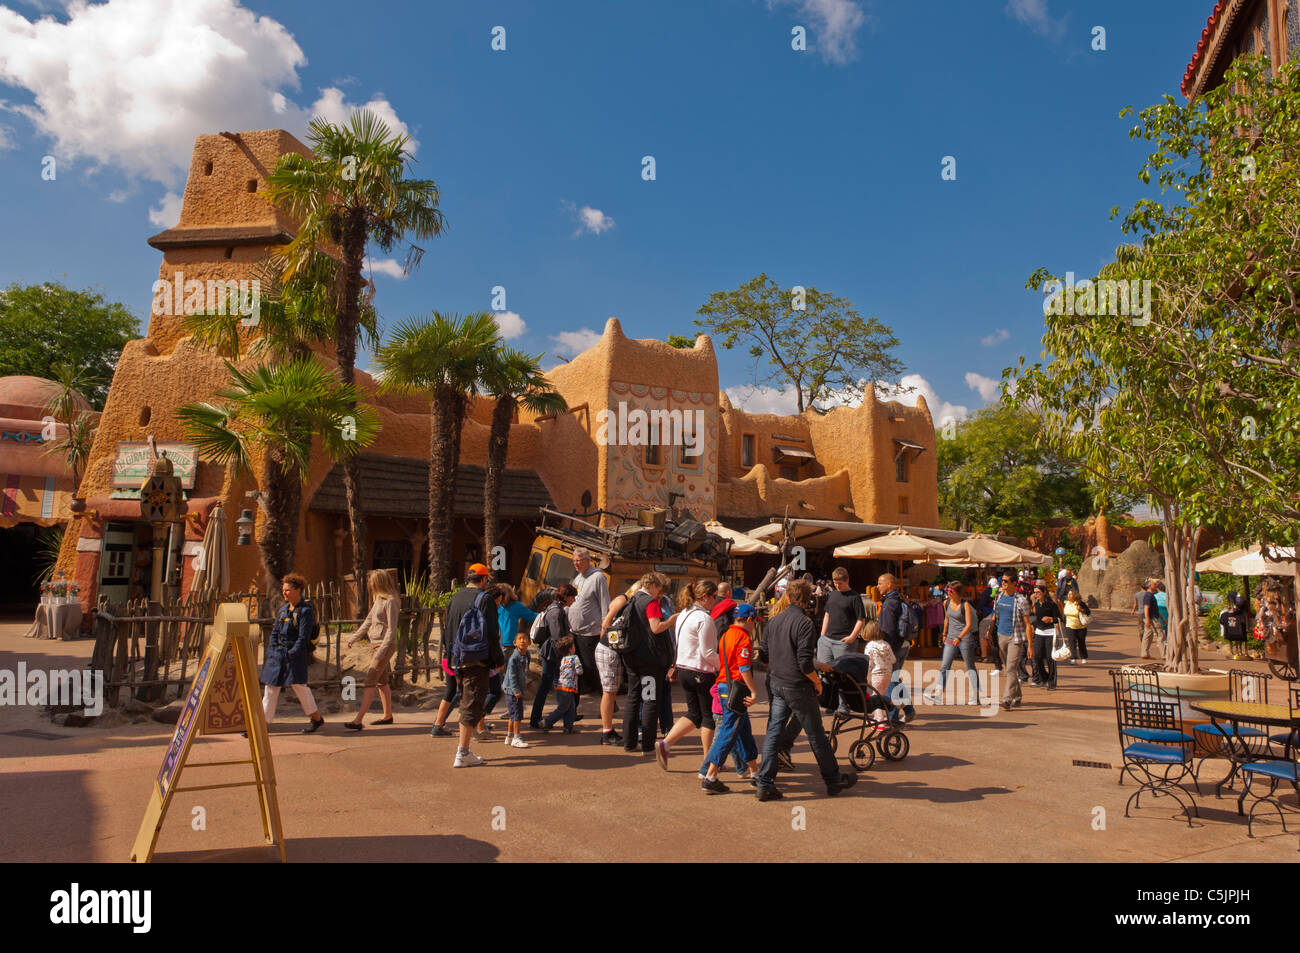 People in Adventureland at Disneyland Paris in France Stock Photo